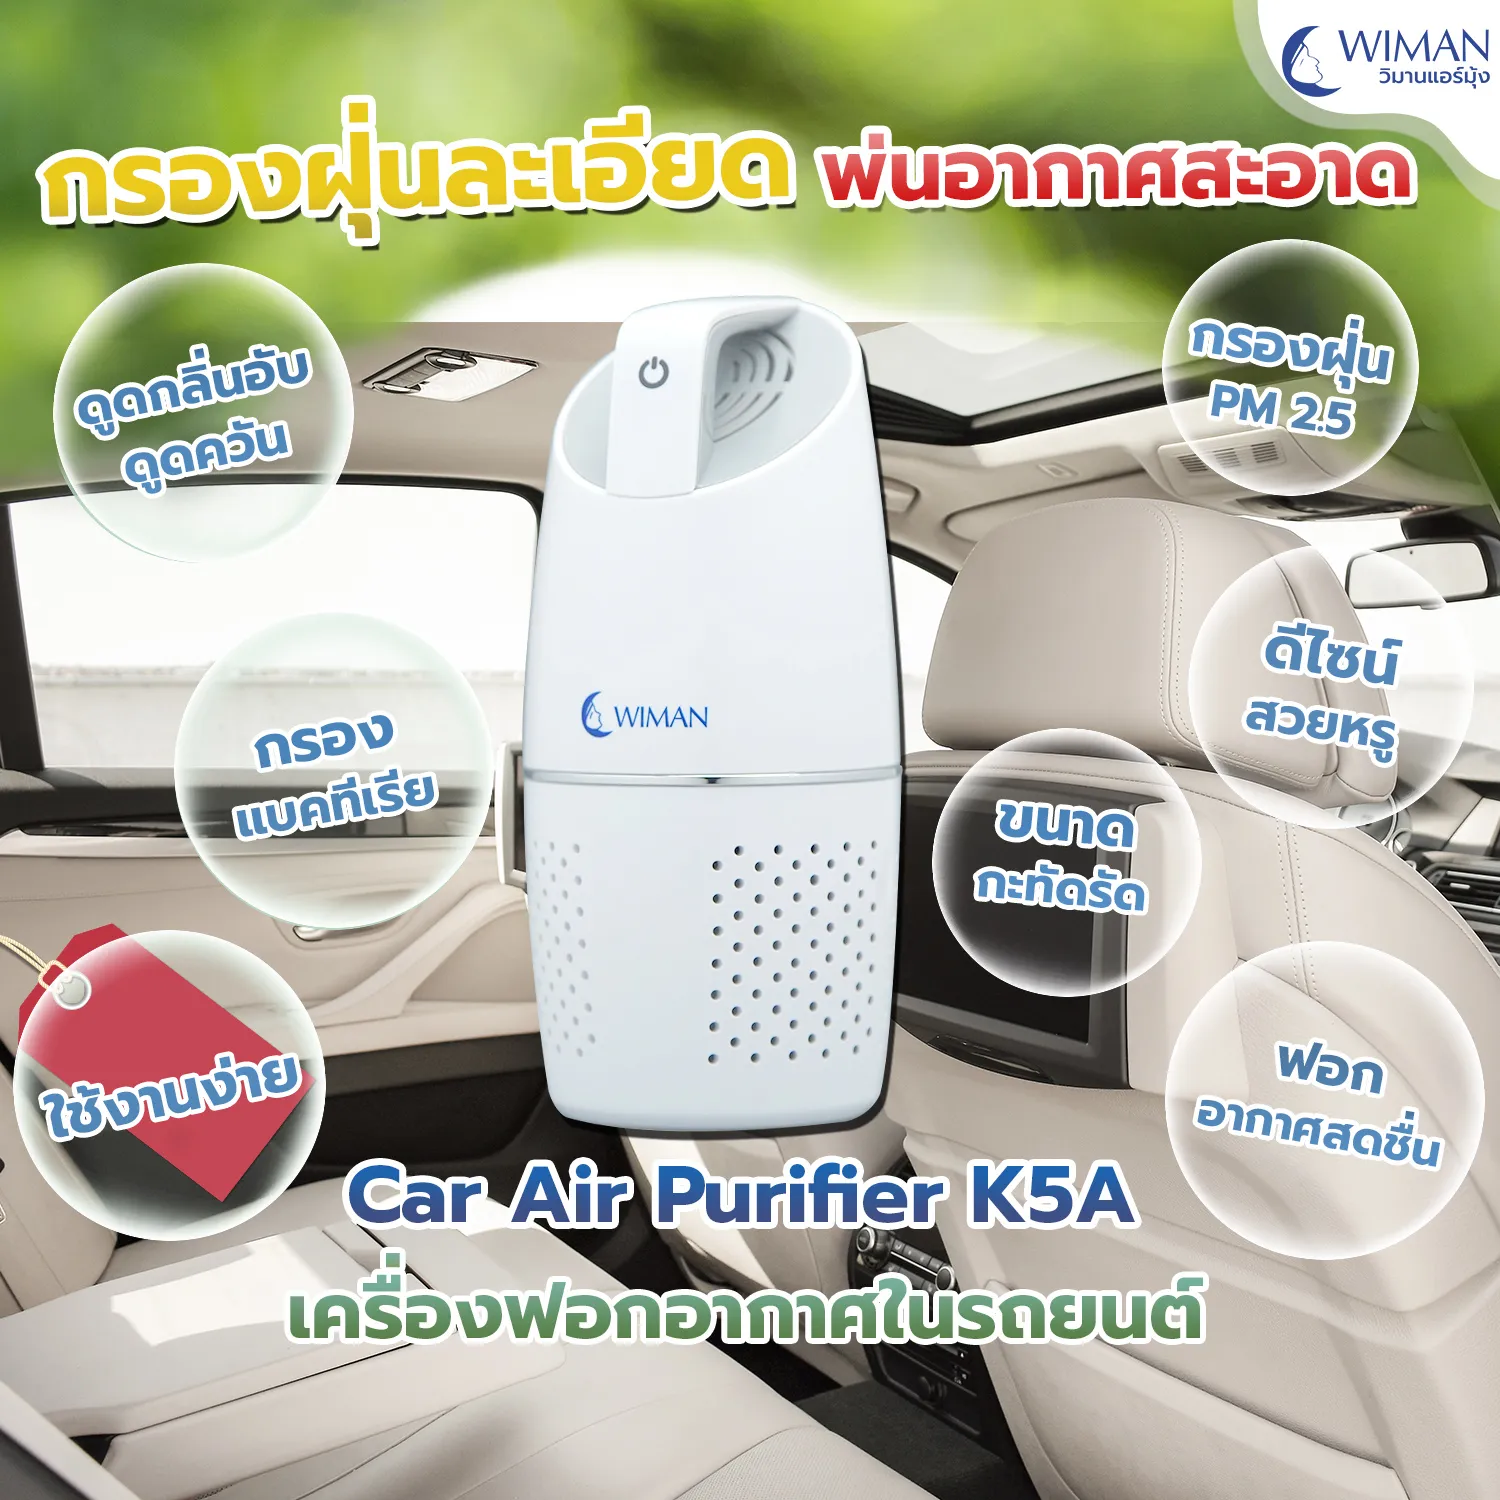 WIMANAIR เครื่องฟอกอากาศ ในรถยนต์ 8 Sqm. Car Air Purify PM2.5 รุ่น K5A ใช้ไฟจากช่องเสียบในรถ ช่วยกรองฝุ่นในห้องโดยสารรถยนต์ได้ดี มีหัวเสียบ USB .ใช้กับไฟบ้านได้ วิมานแอร์ สะดวก สะอาด ประหยัด ปลอดภัย มีใบรับประกัน